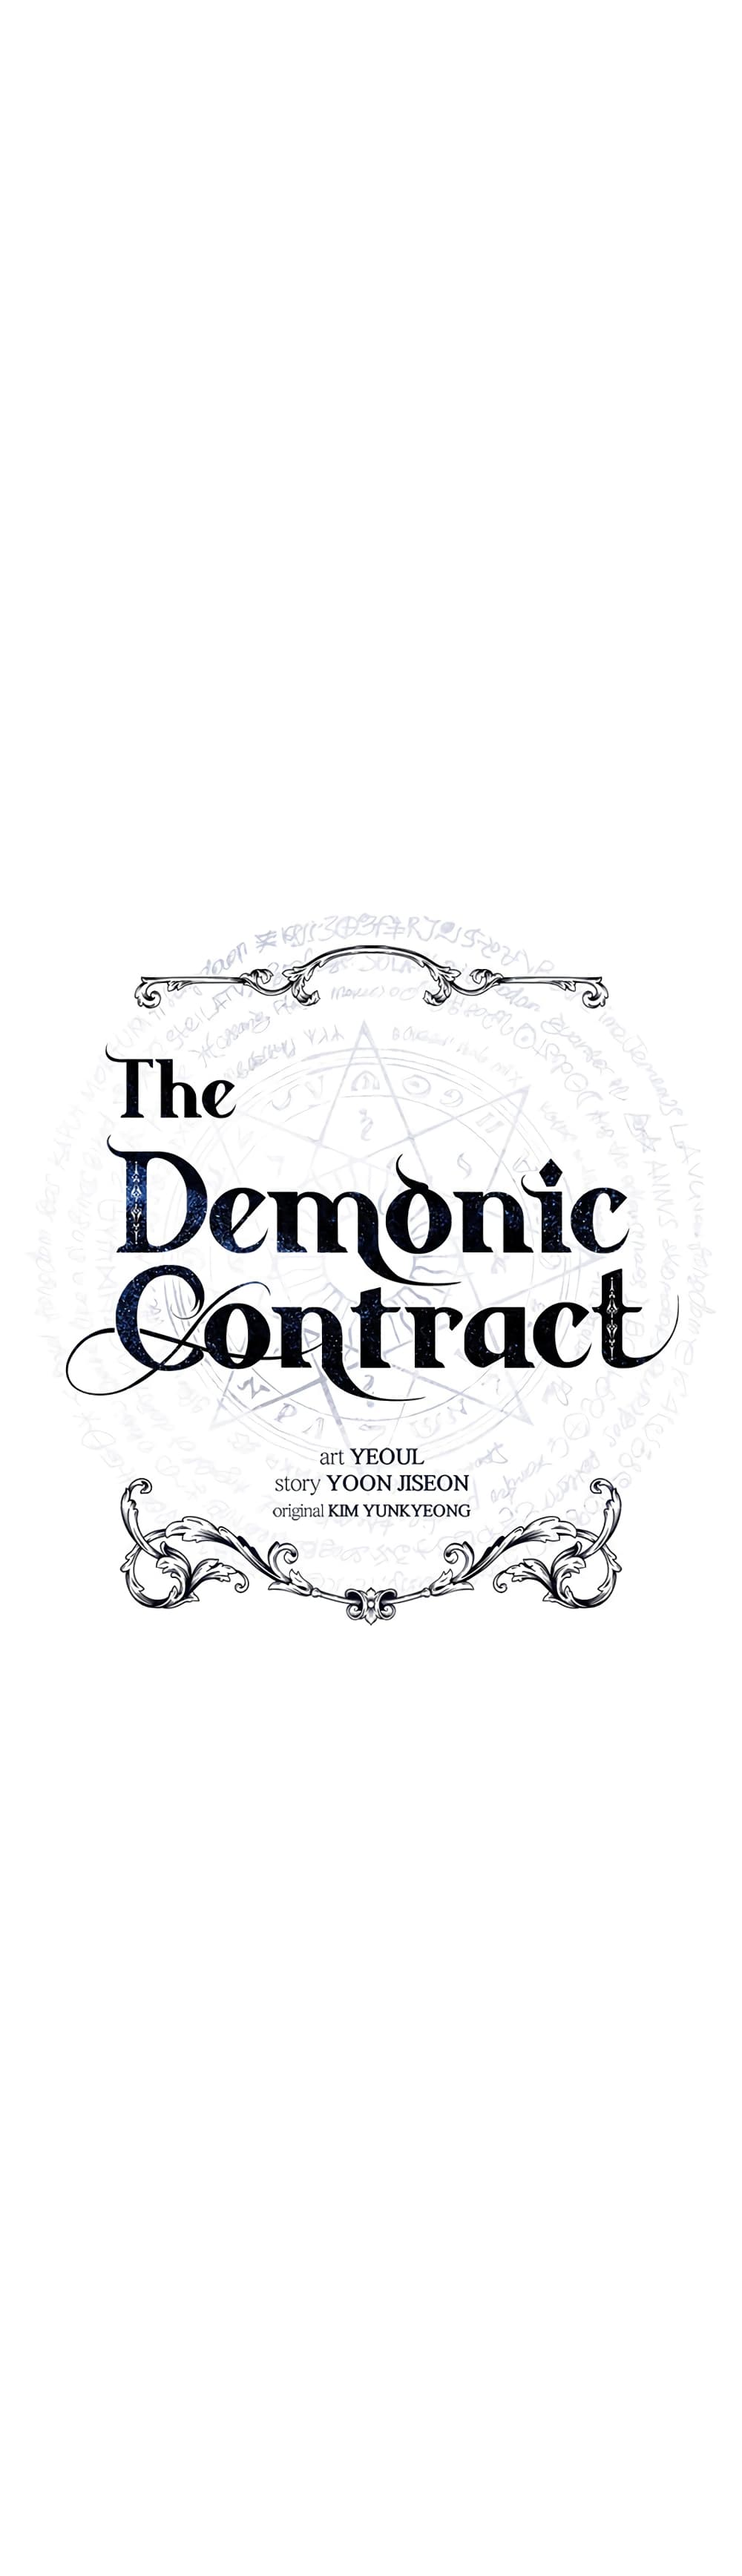 The Demonic Contract 45 05